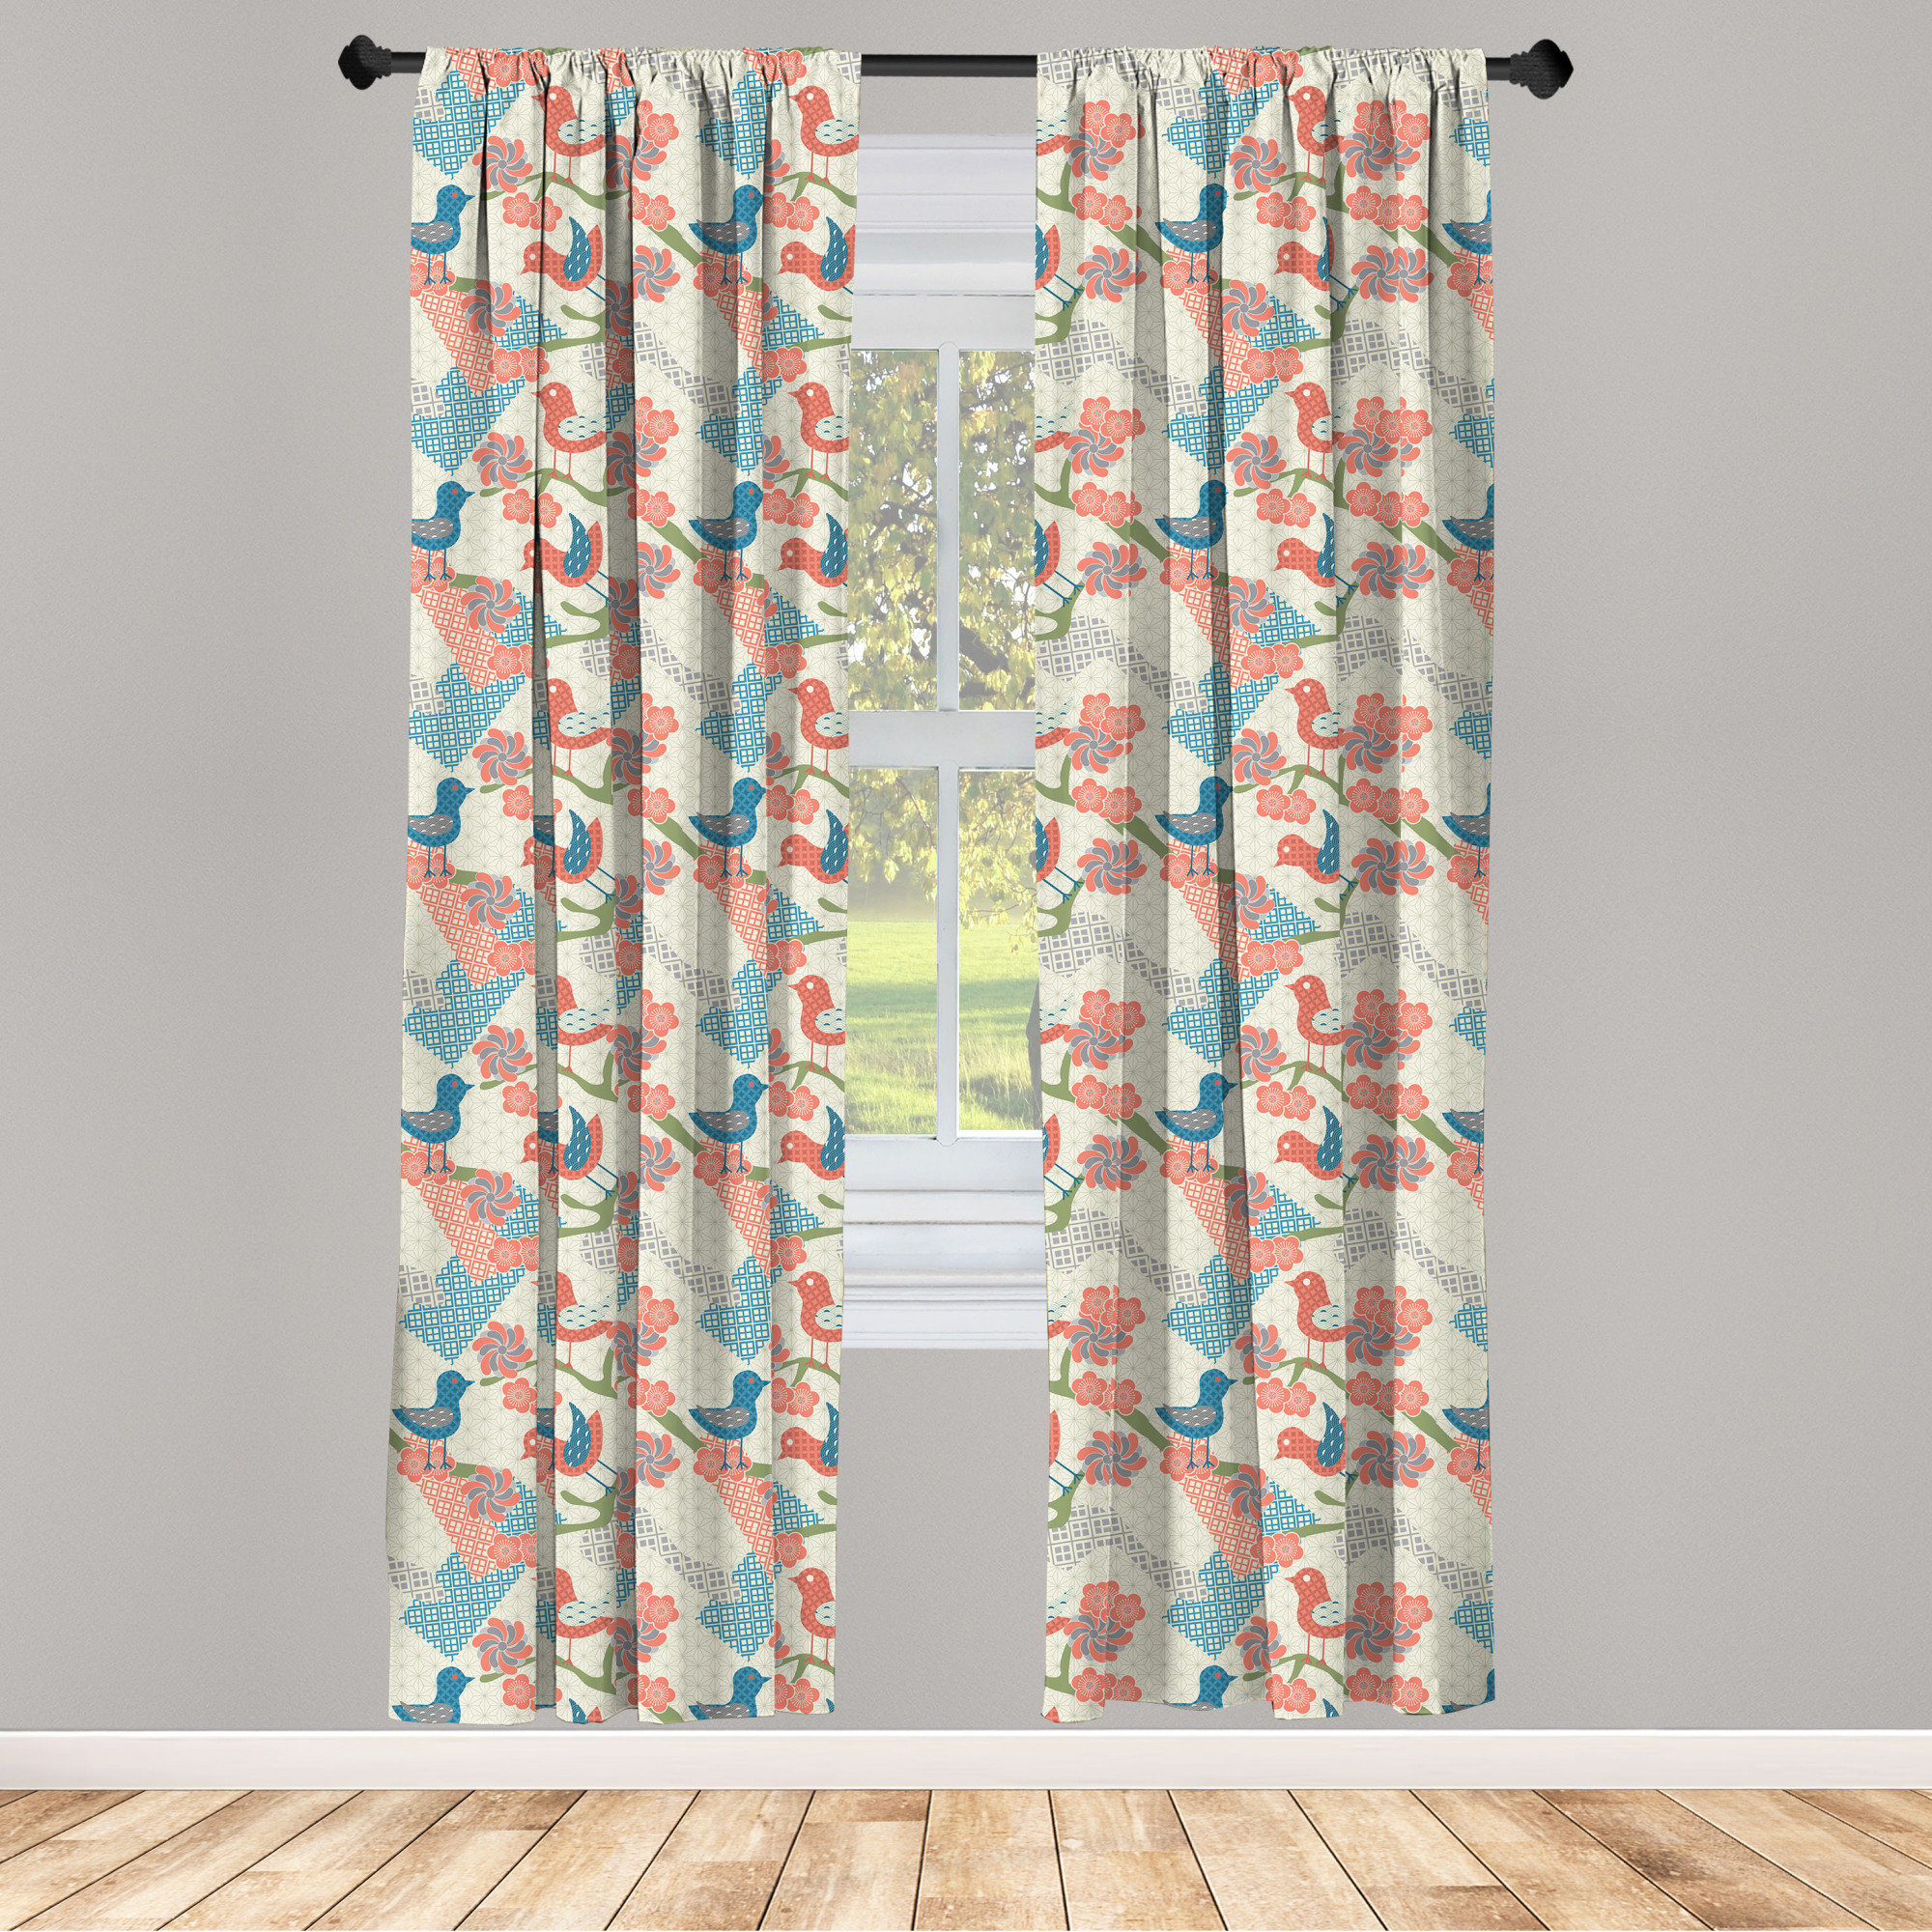 3D Sunset Hills Blockout Photo Curtain Printing Curtains Drapes Fabric Window AU 